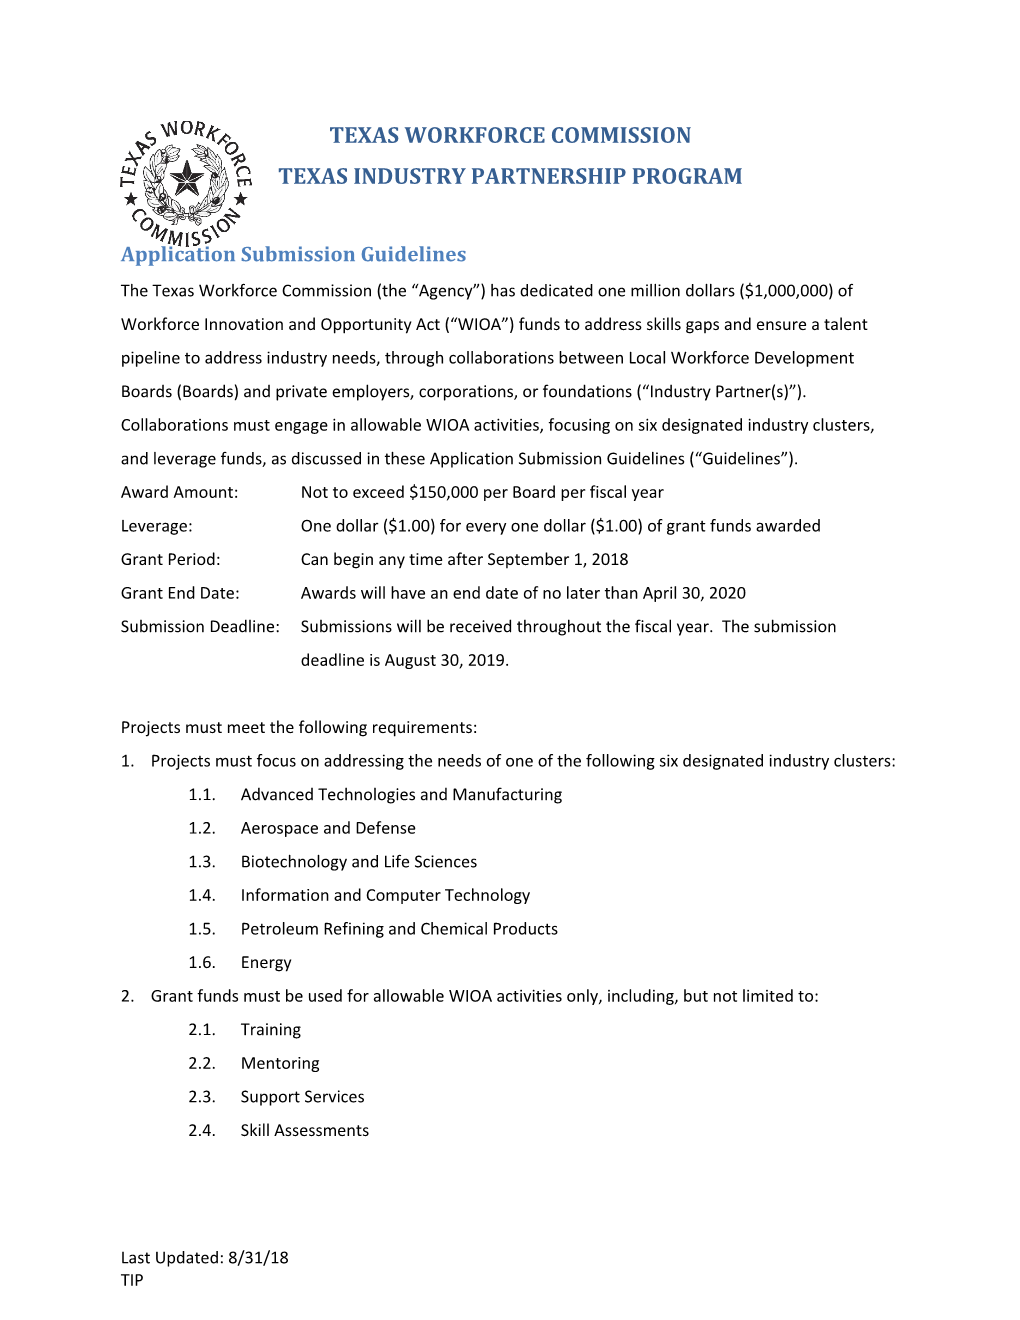 Texas Industry Partnership Program Application Guidelines & Form